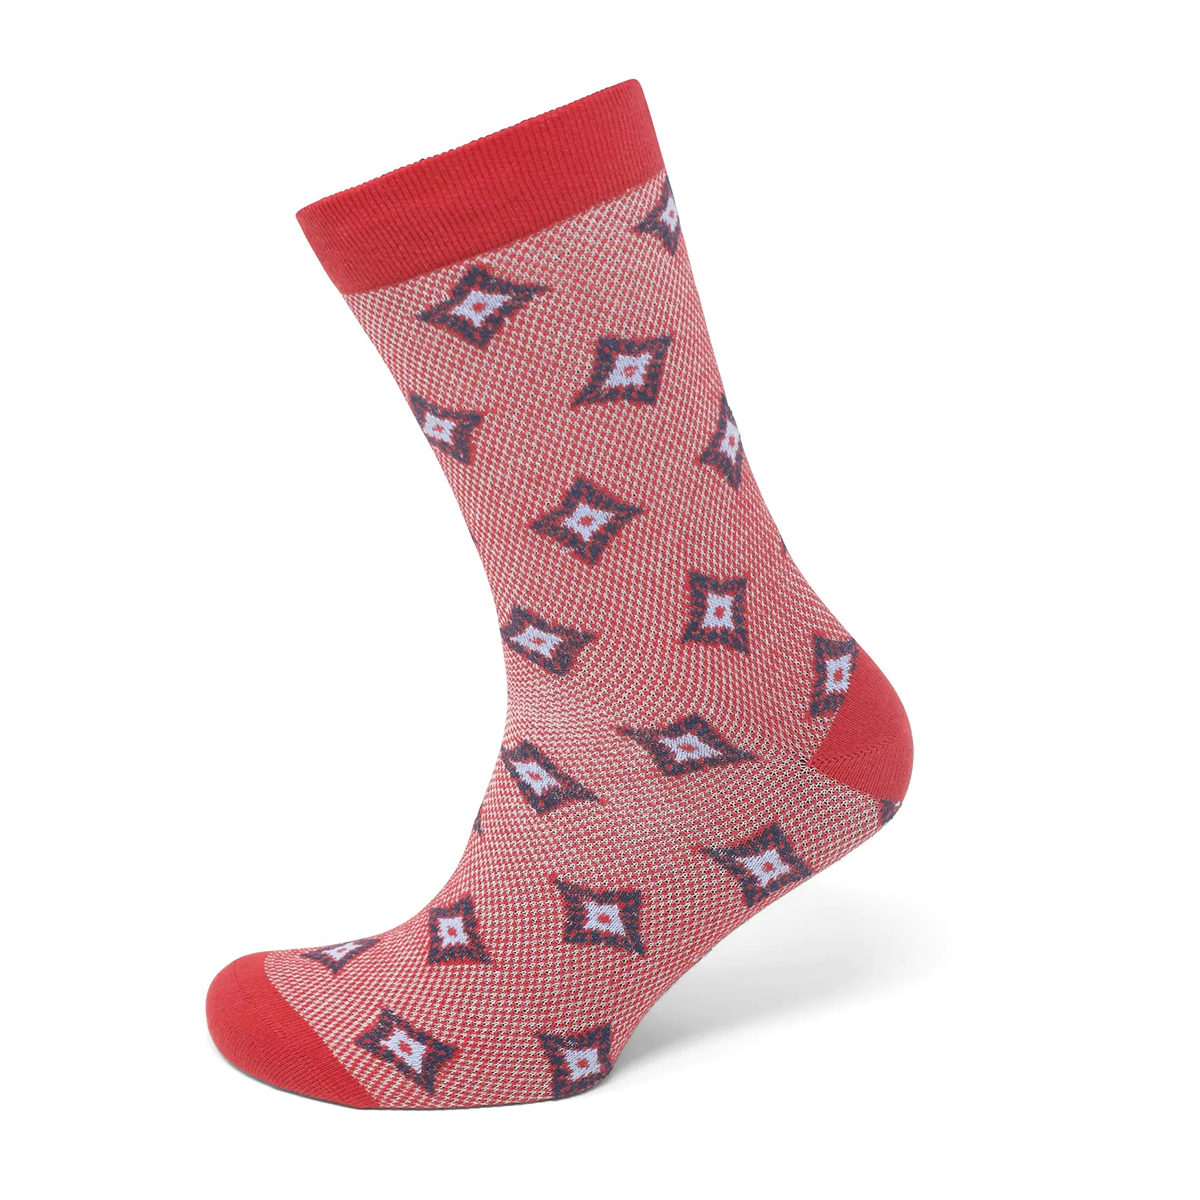 Tasker & Shaw | Luxury Menswear | Woven red socks with Diamons pattern, French Cotton